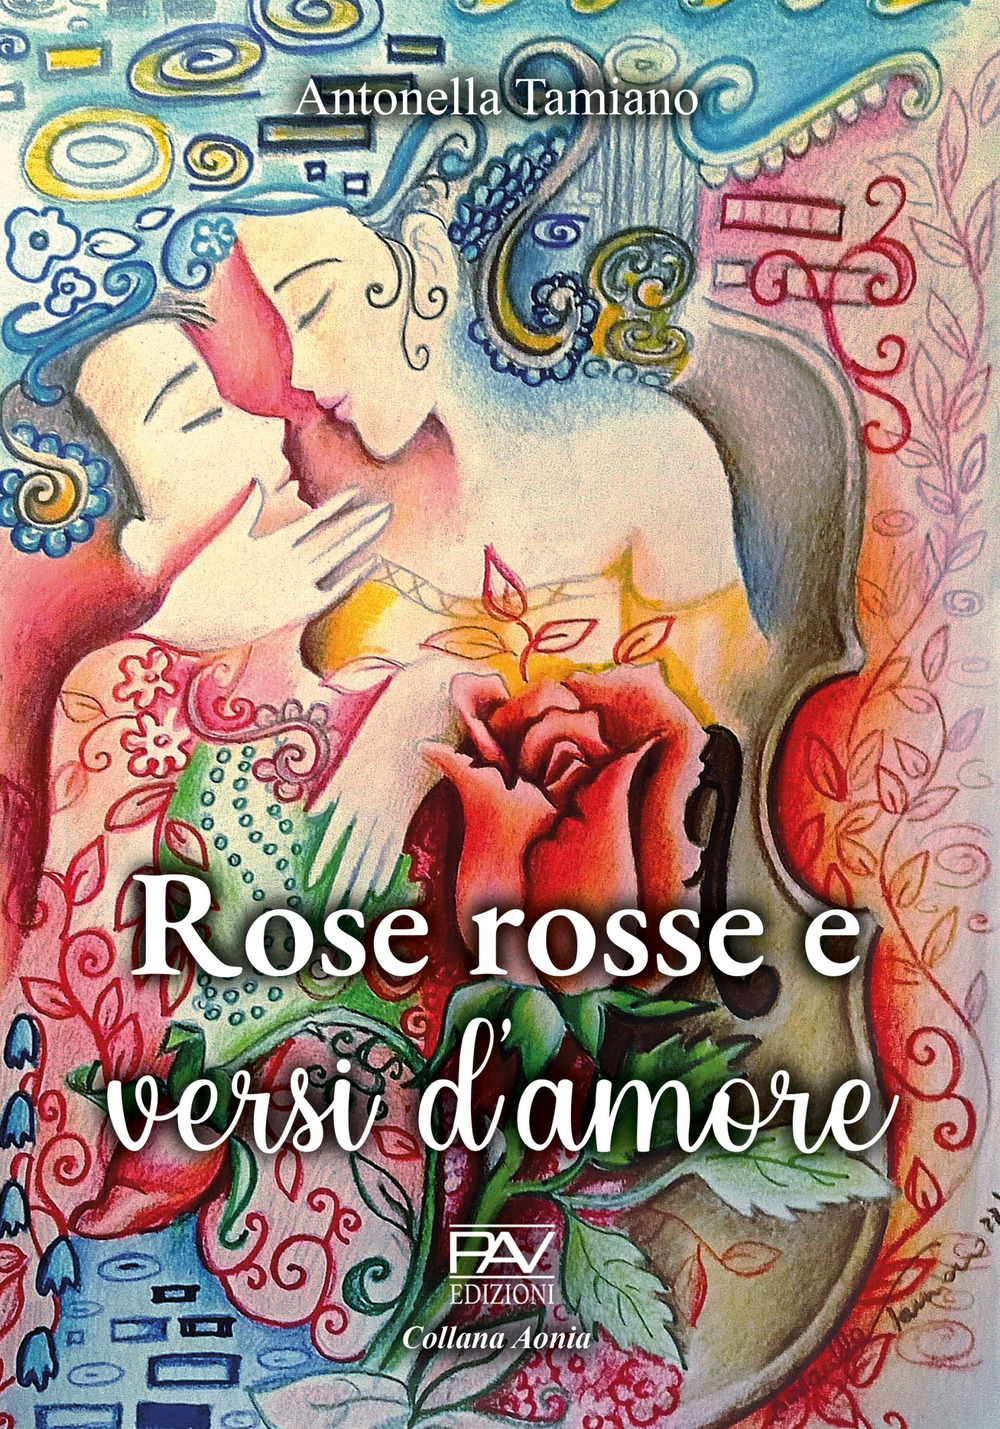 Rose rosse e versi d'amore